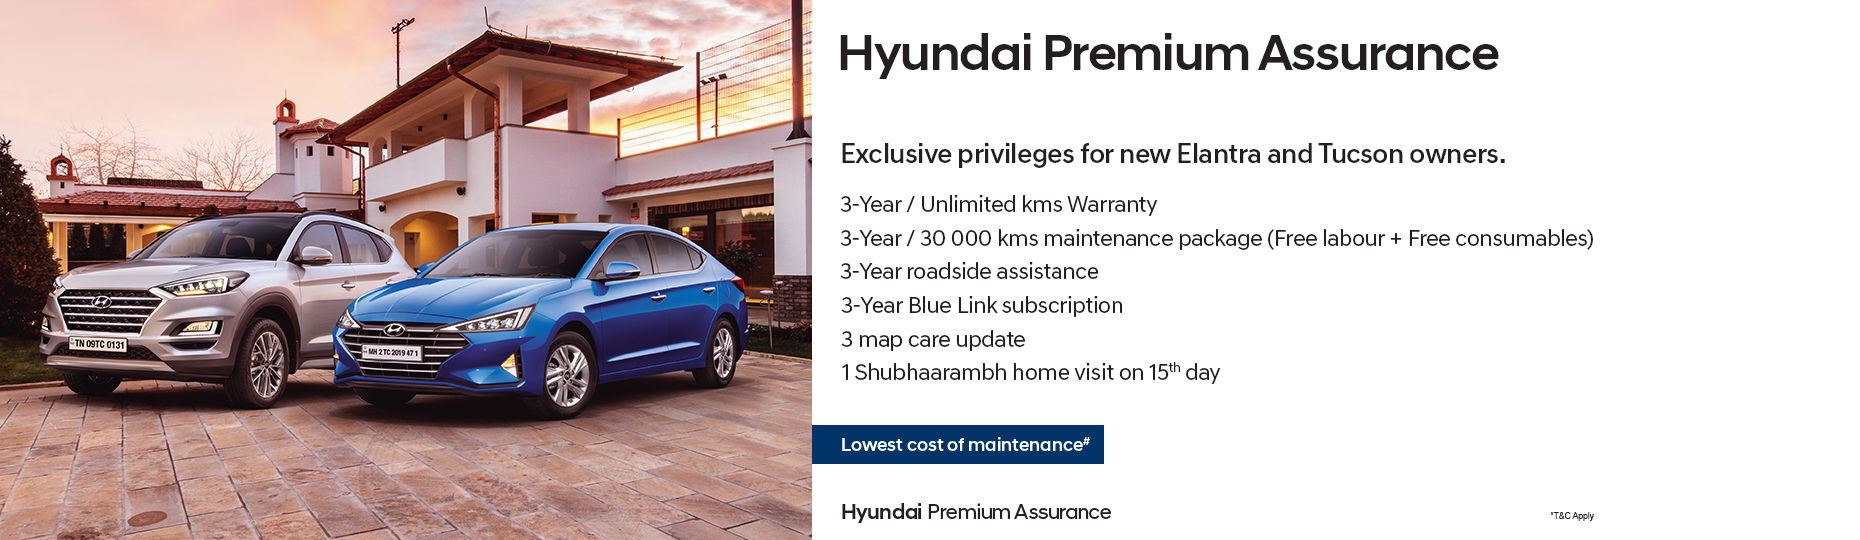 Hyundai premium assurance